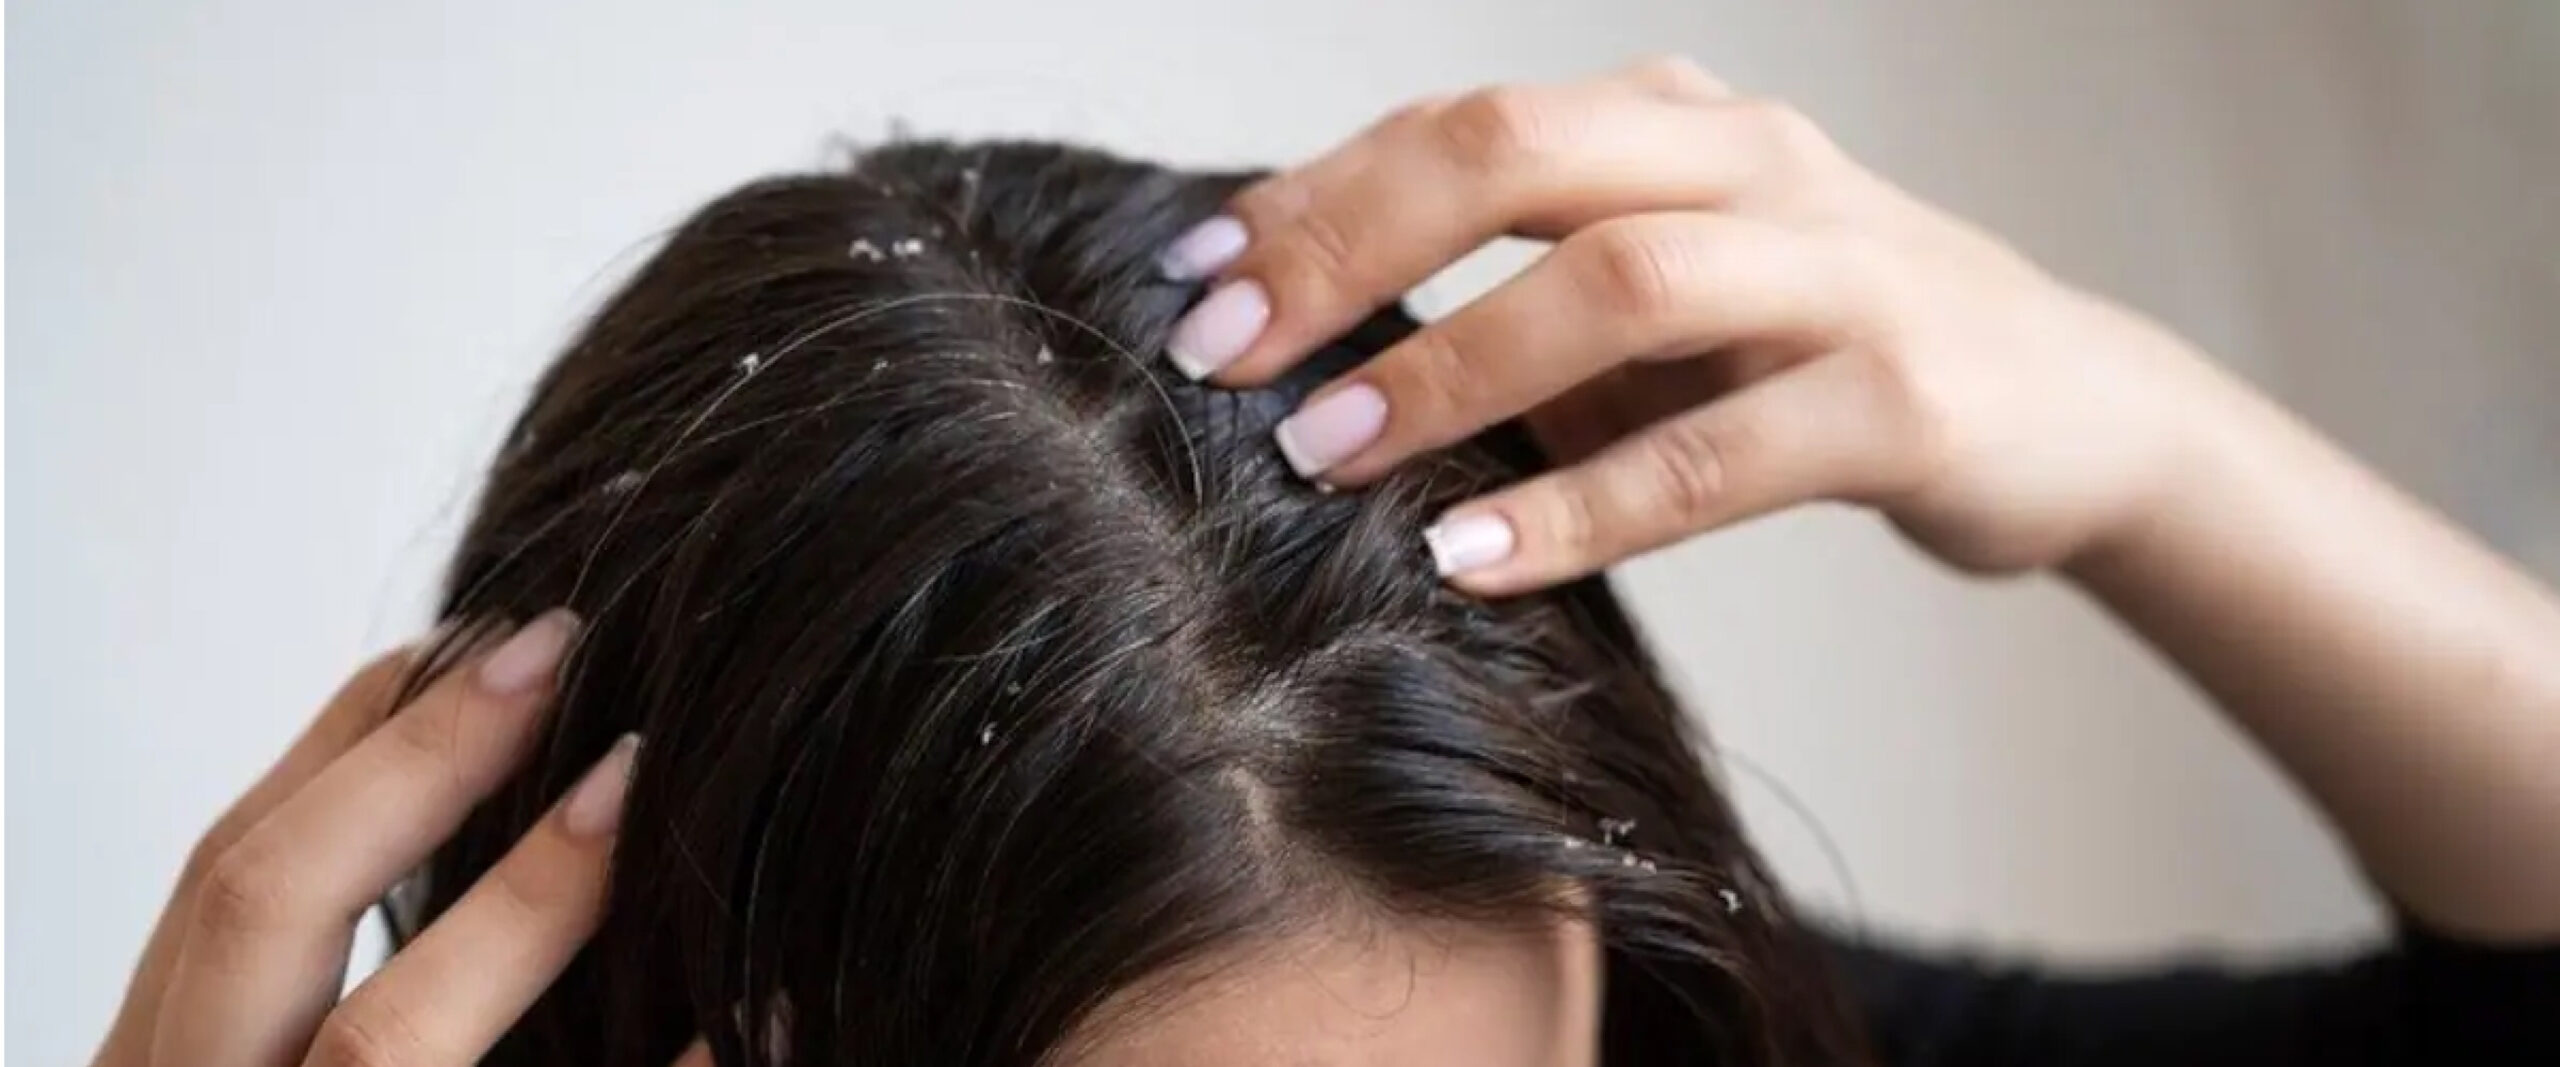 Dandruff Treatment in Mira Bhayandar - Hair Treatment Services